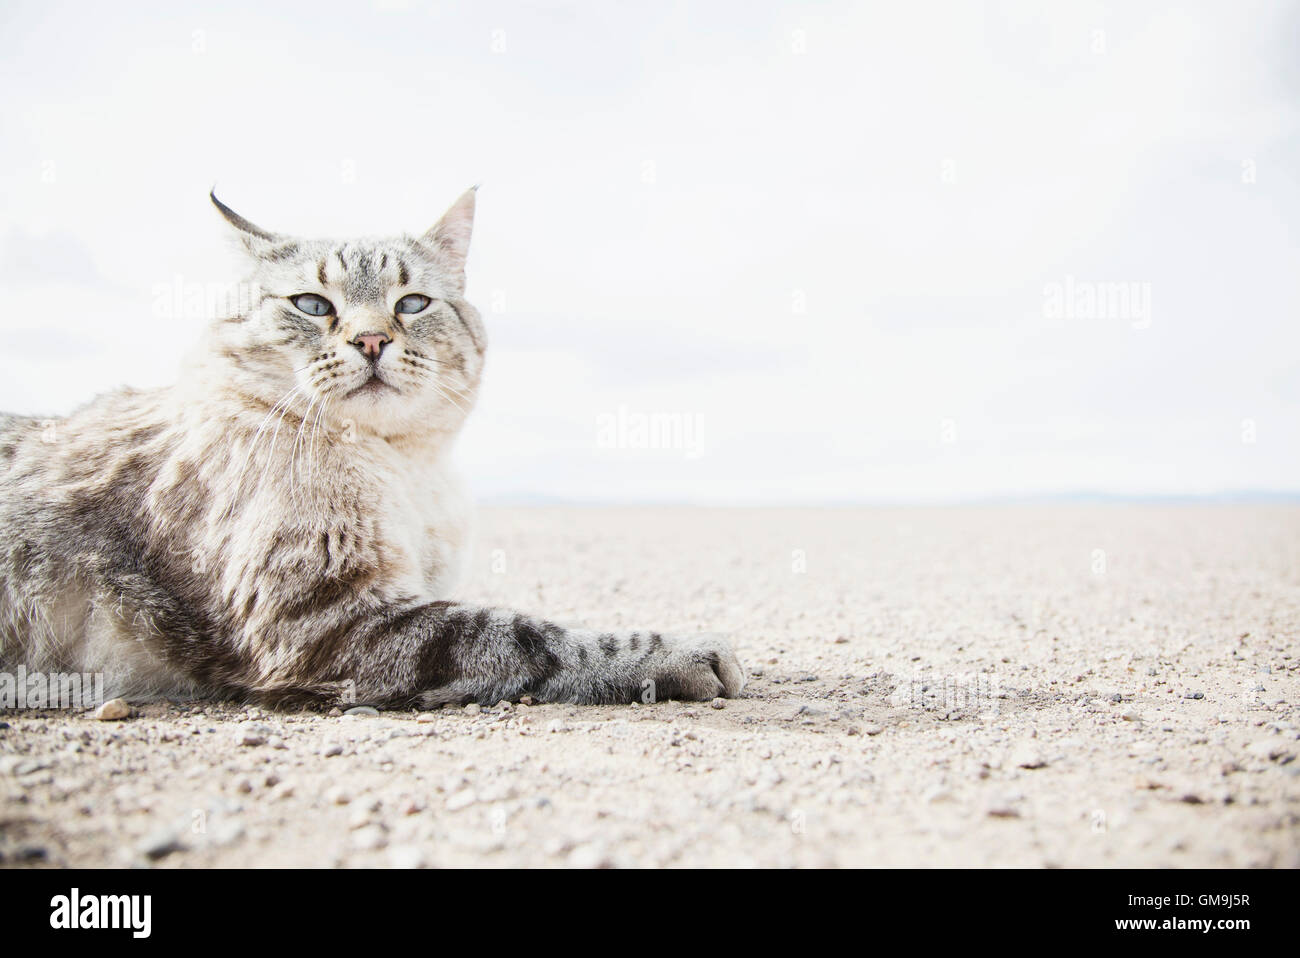 Cat resting on ground Stock Photo